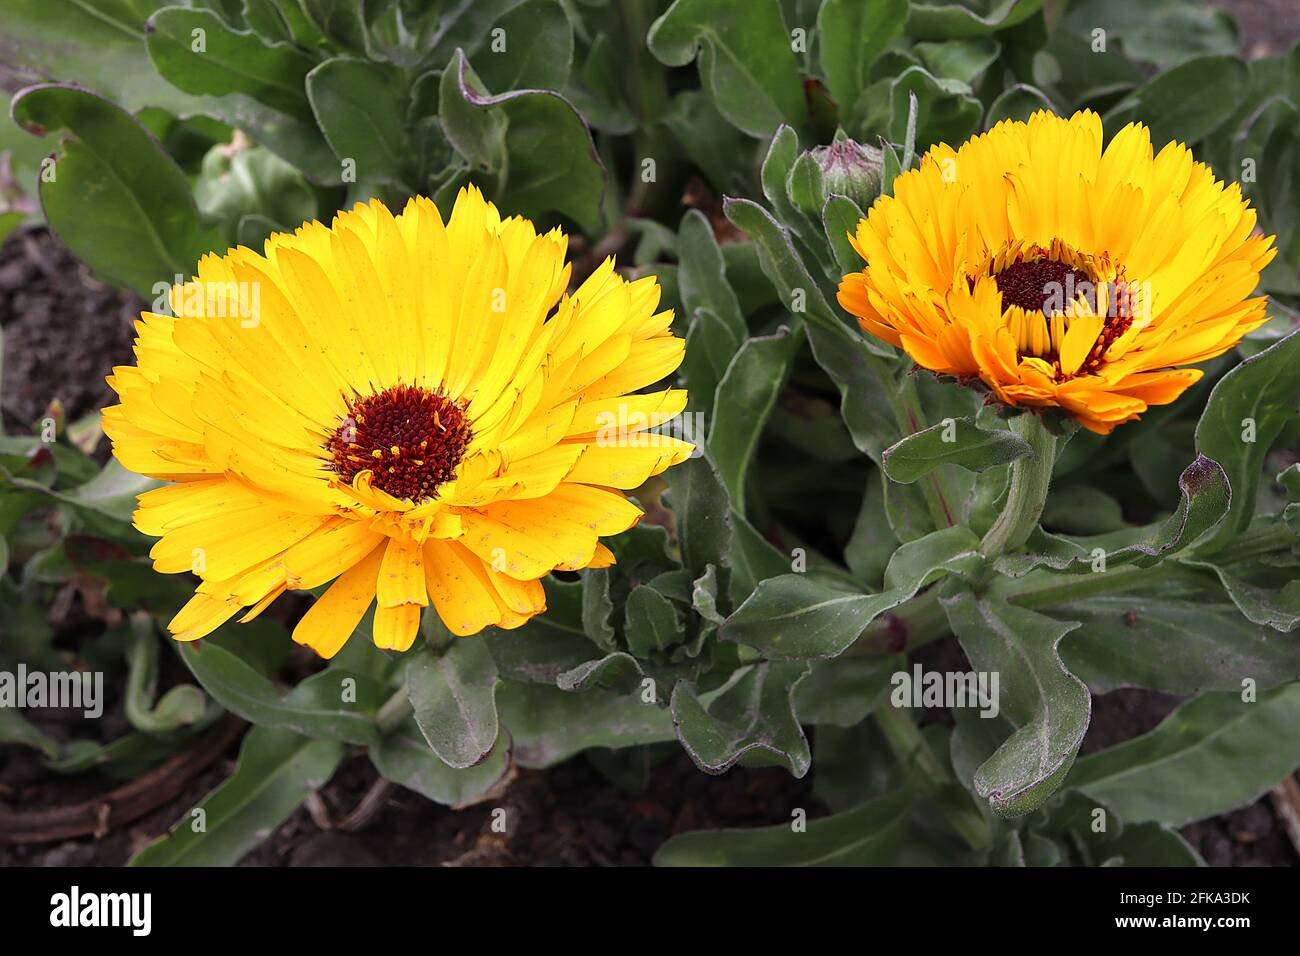 Calendula officinalis Pot Marigold – flores amarillas tipo margarita con  propiedades medicinales, abril, Inglaterra, Reino Unido Fotografía de stock  - Alamy